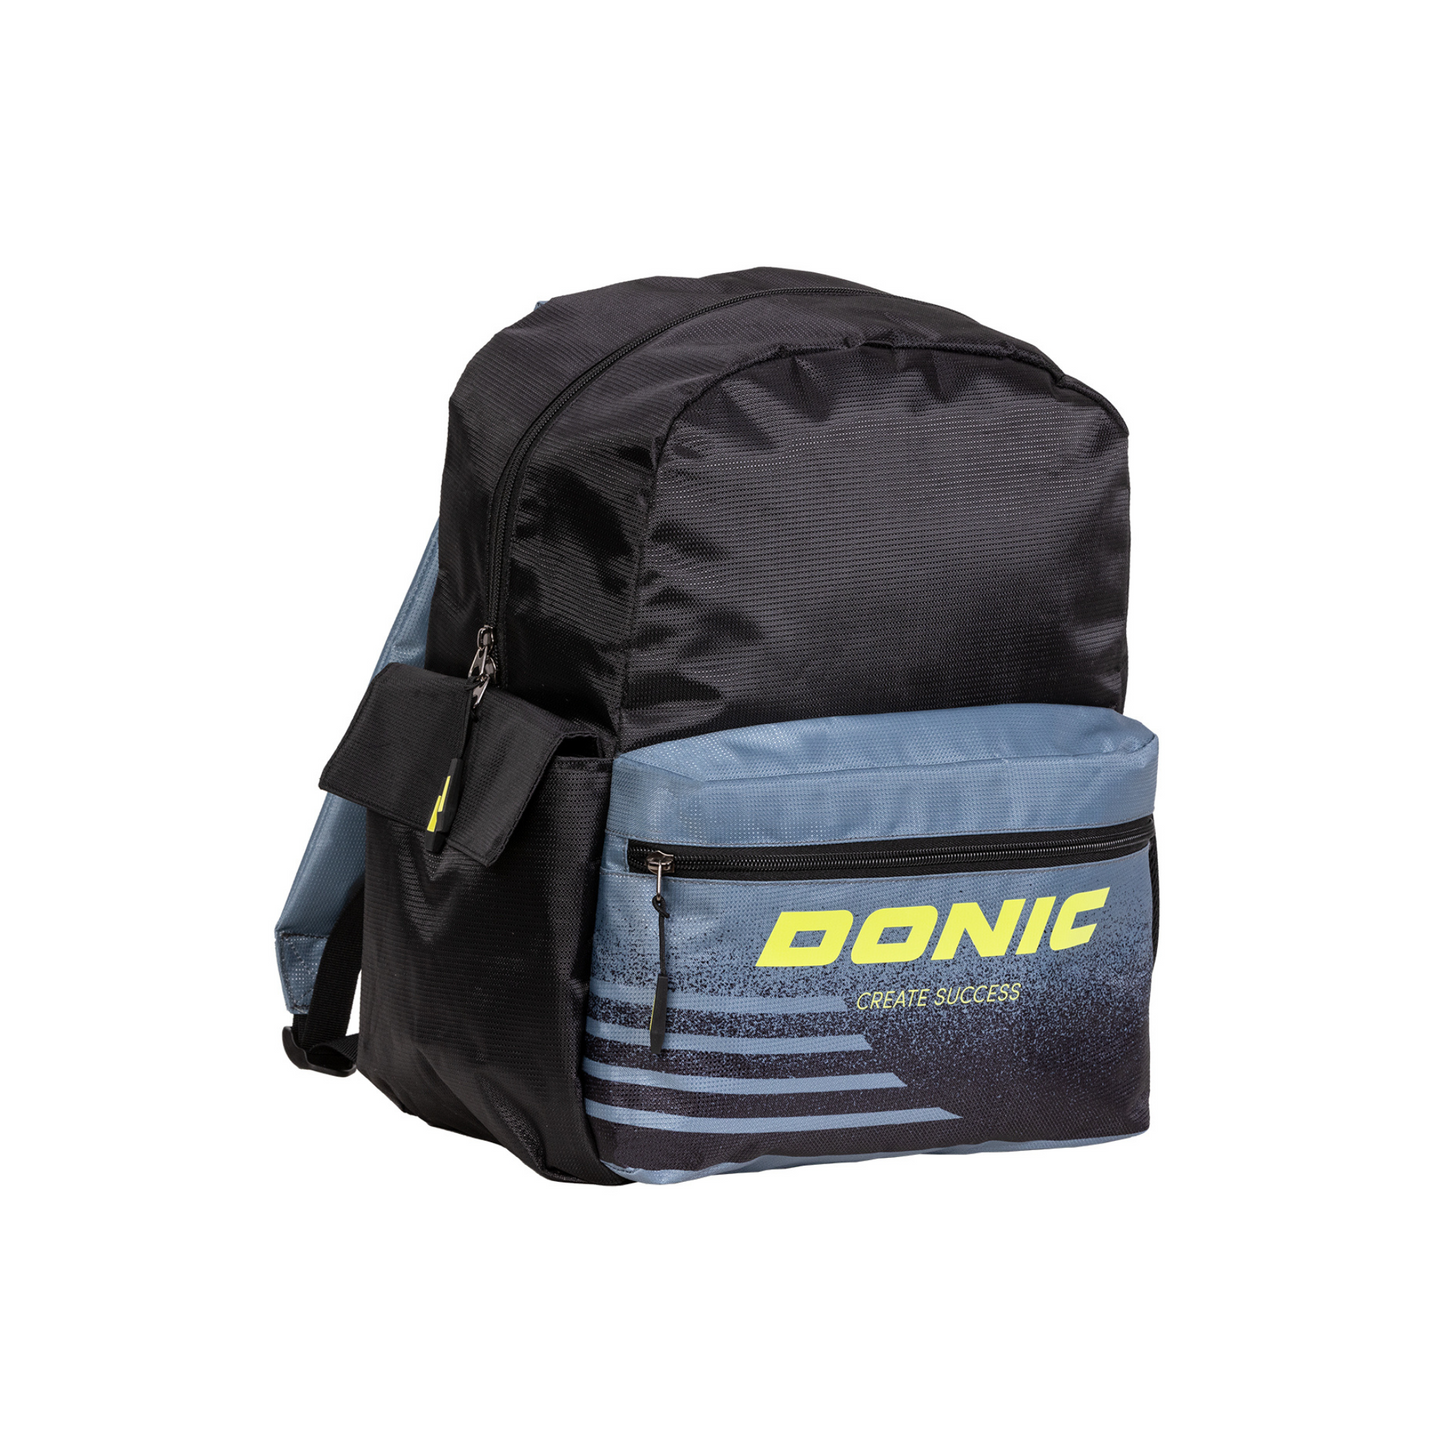 Donic Backpack Nova